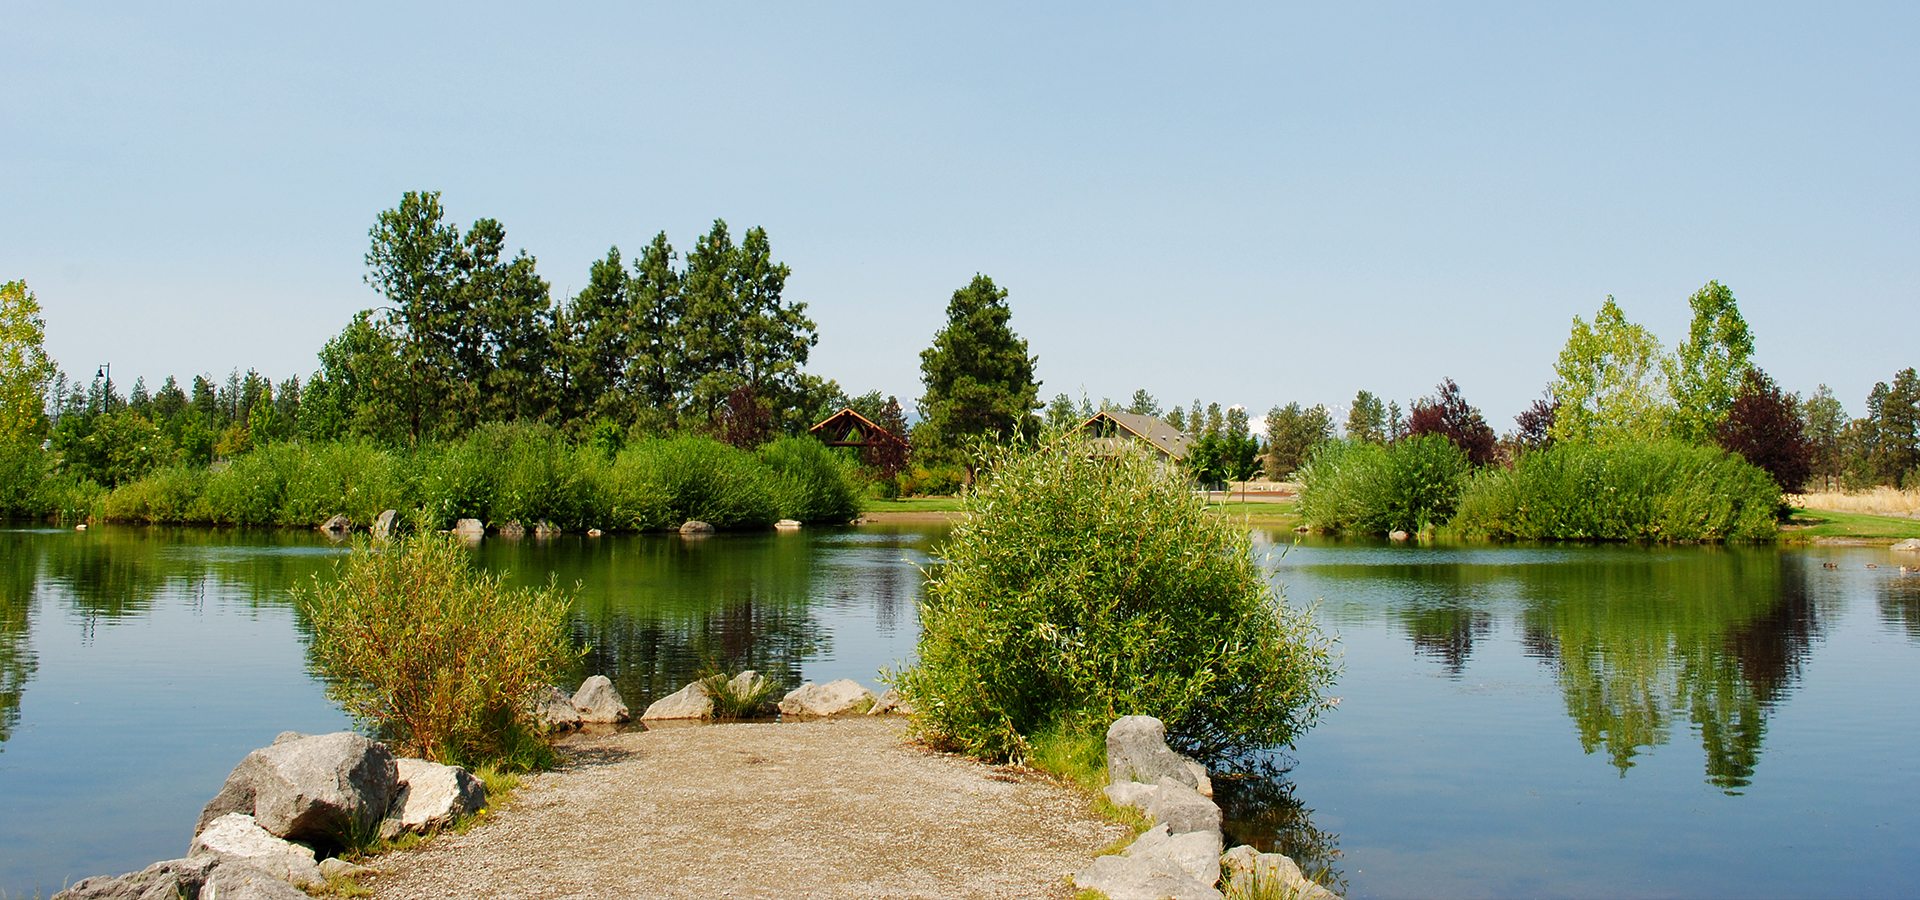 The fishing pond at Pine Nursery Park.